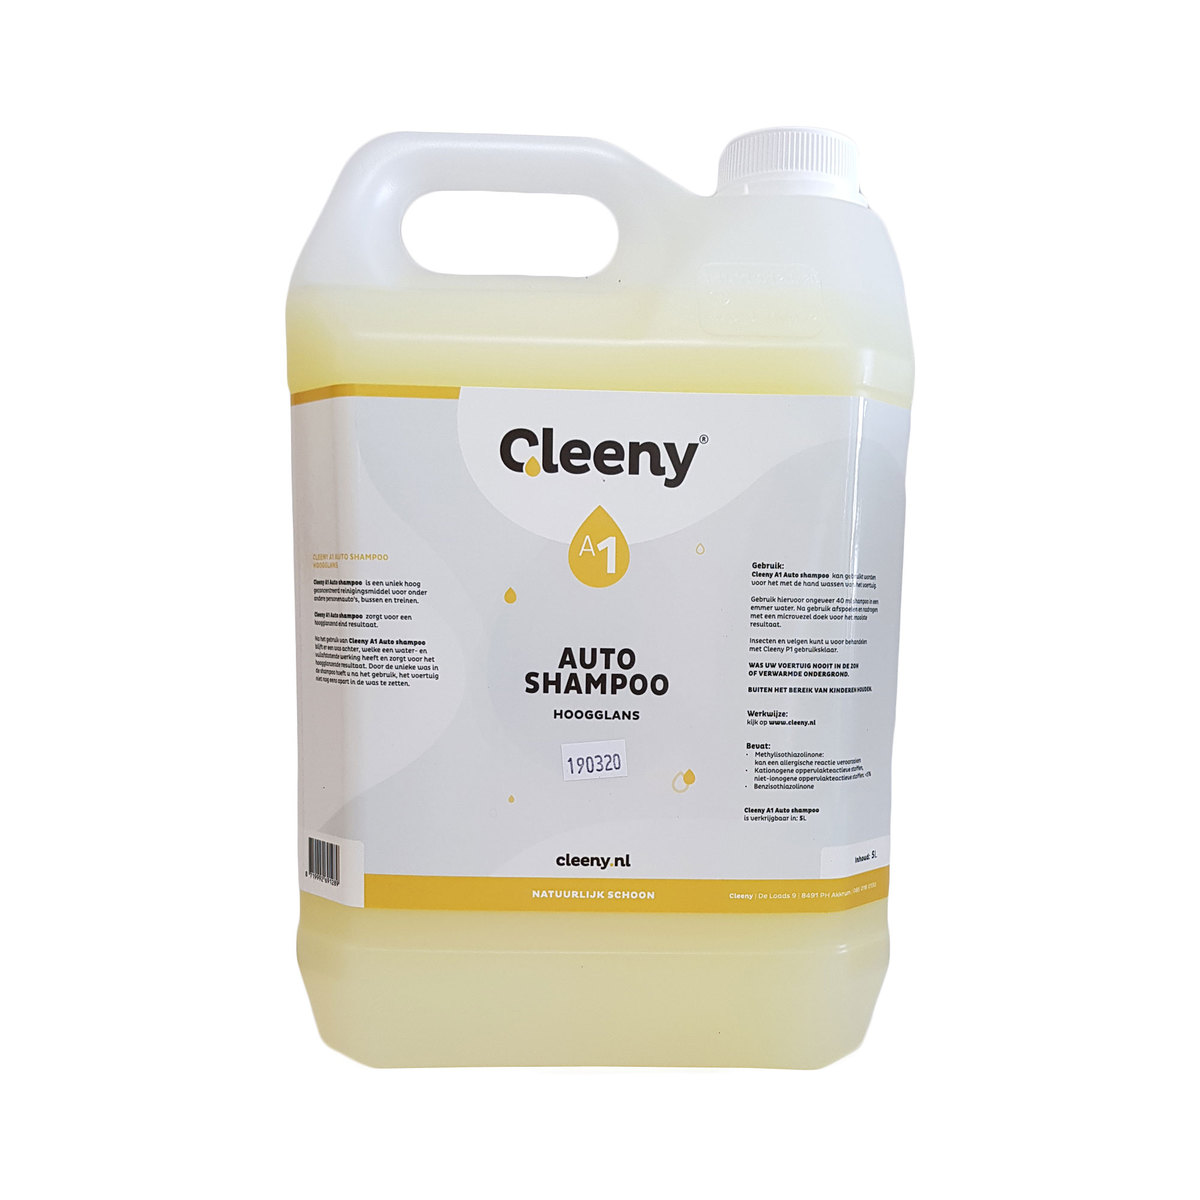 Cleeny autoshampoo - Cleeny, Natuurlijk schoon - Autoshampoo met wax